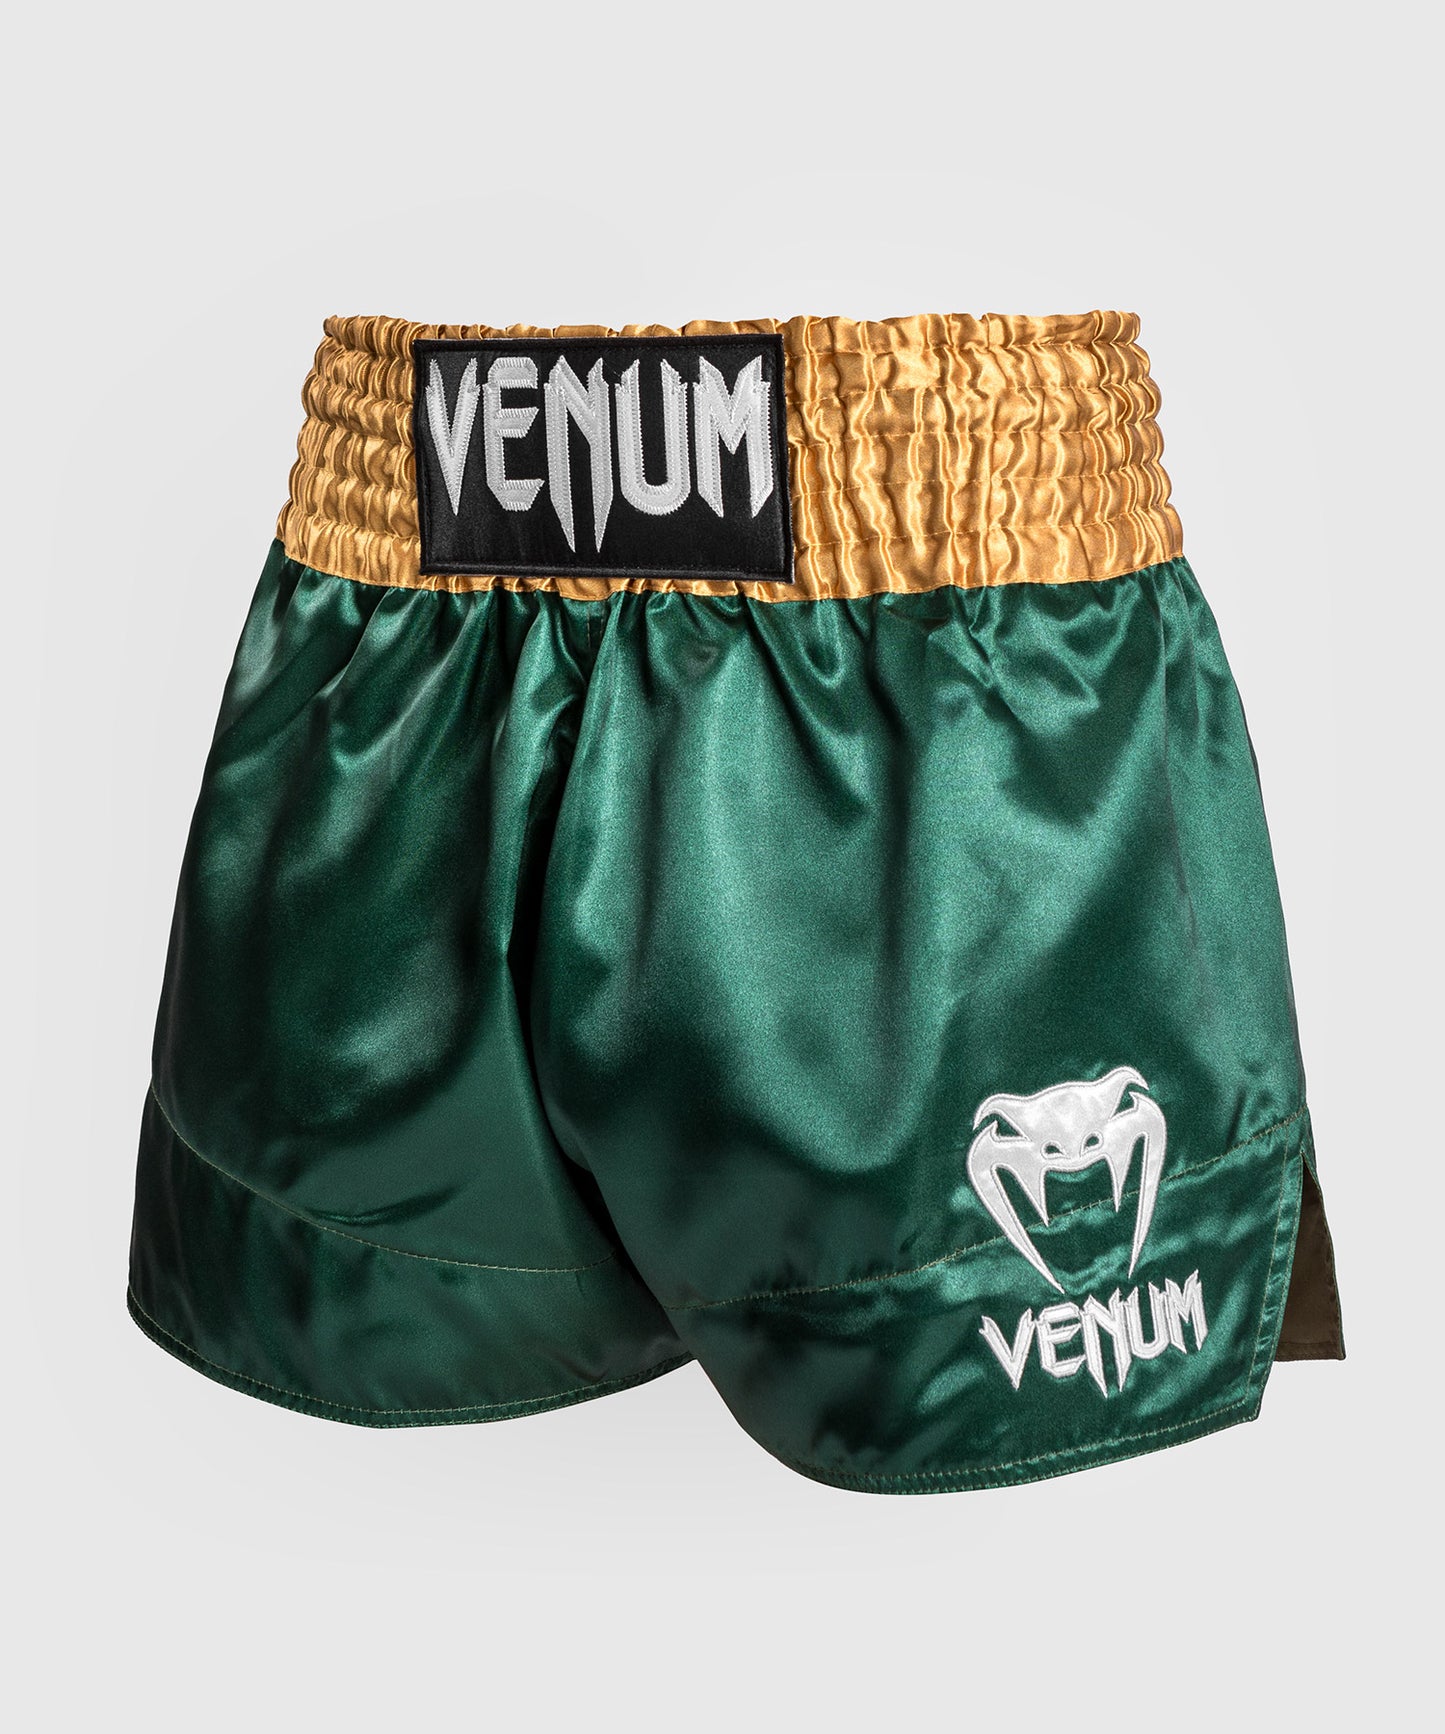 Venum Classic - Muay Thai Short - Verde/Dorado/Blanco